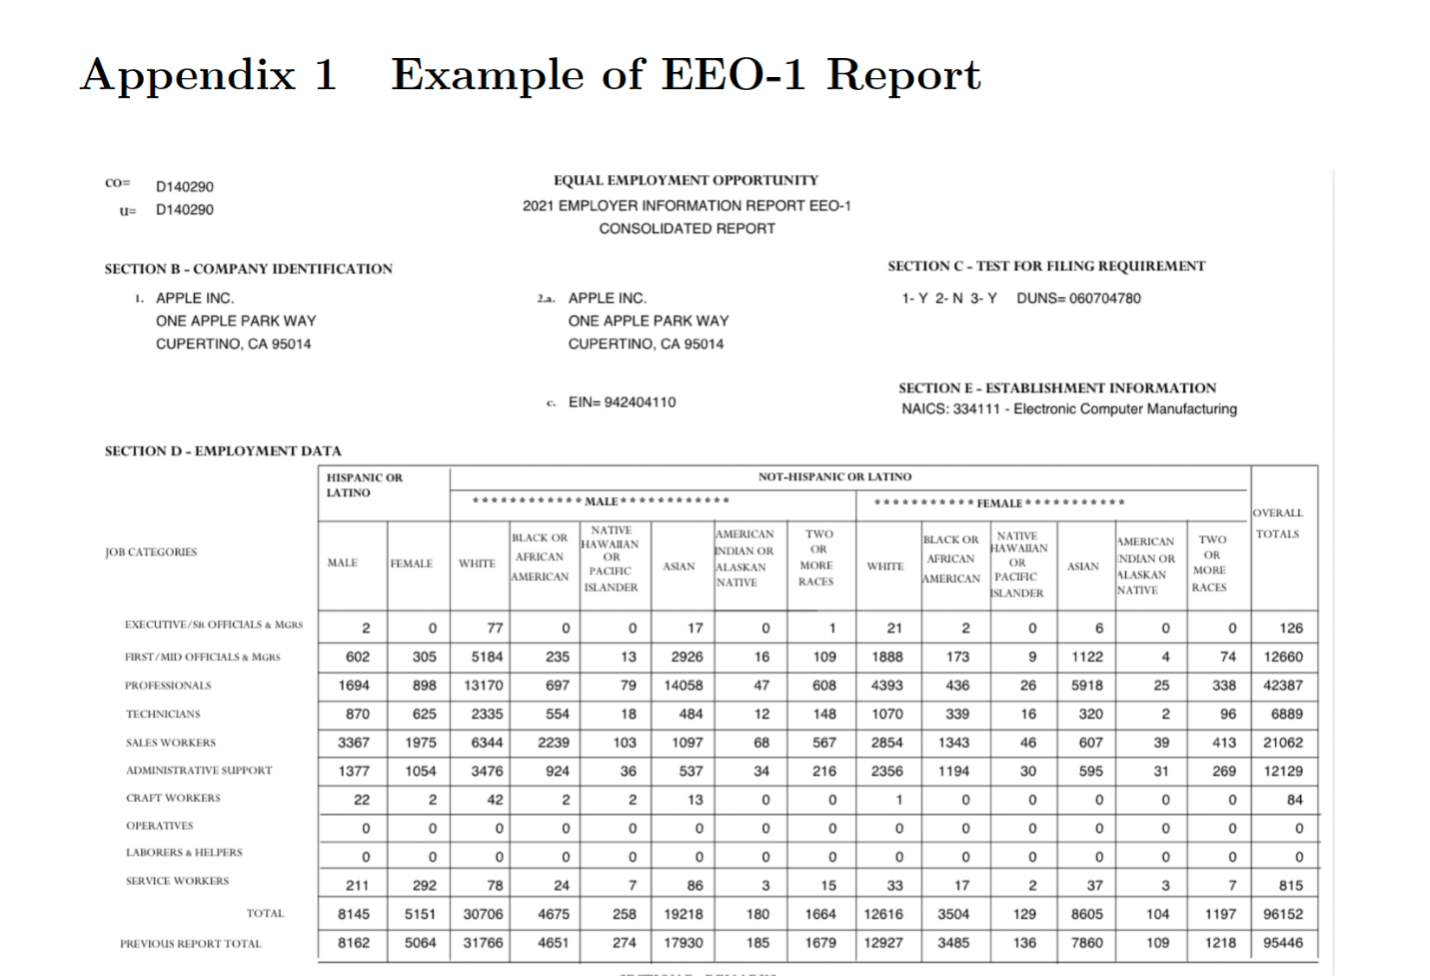 Example of an EEO-1 report